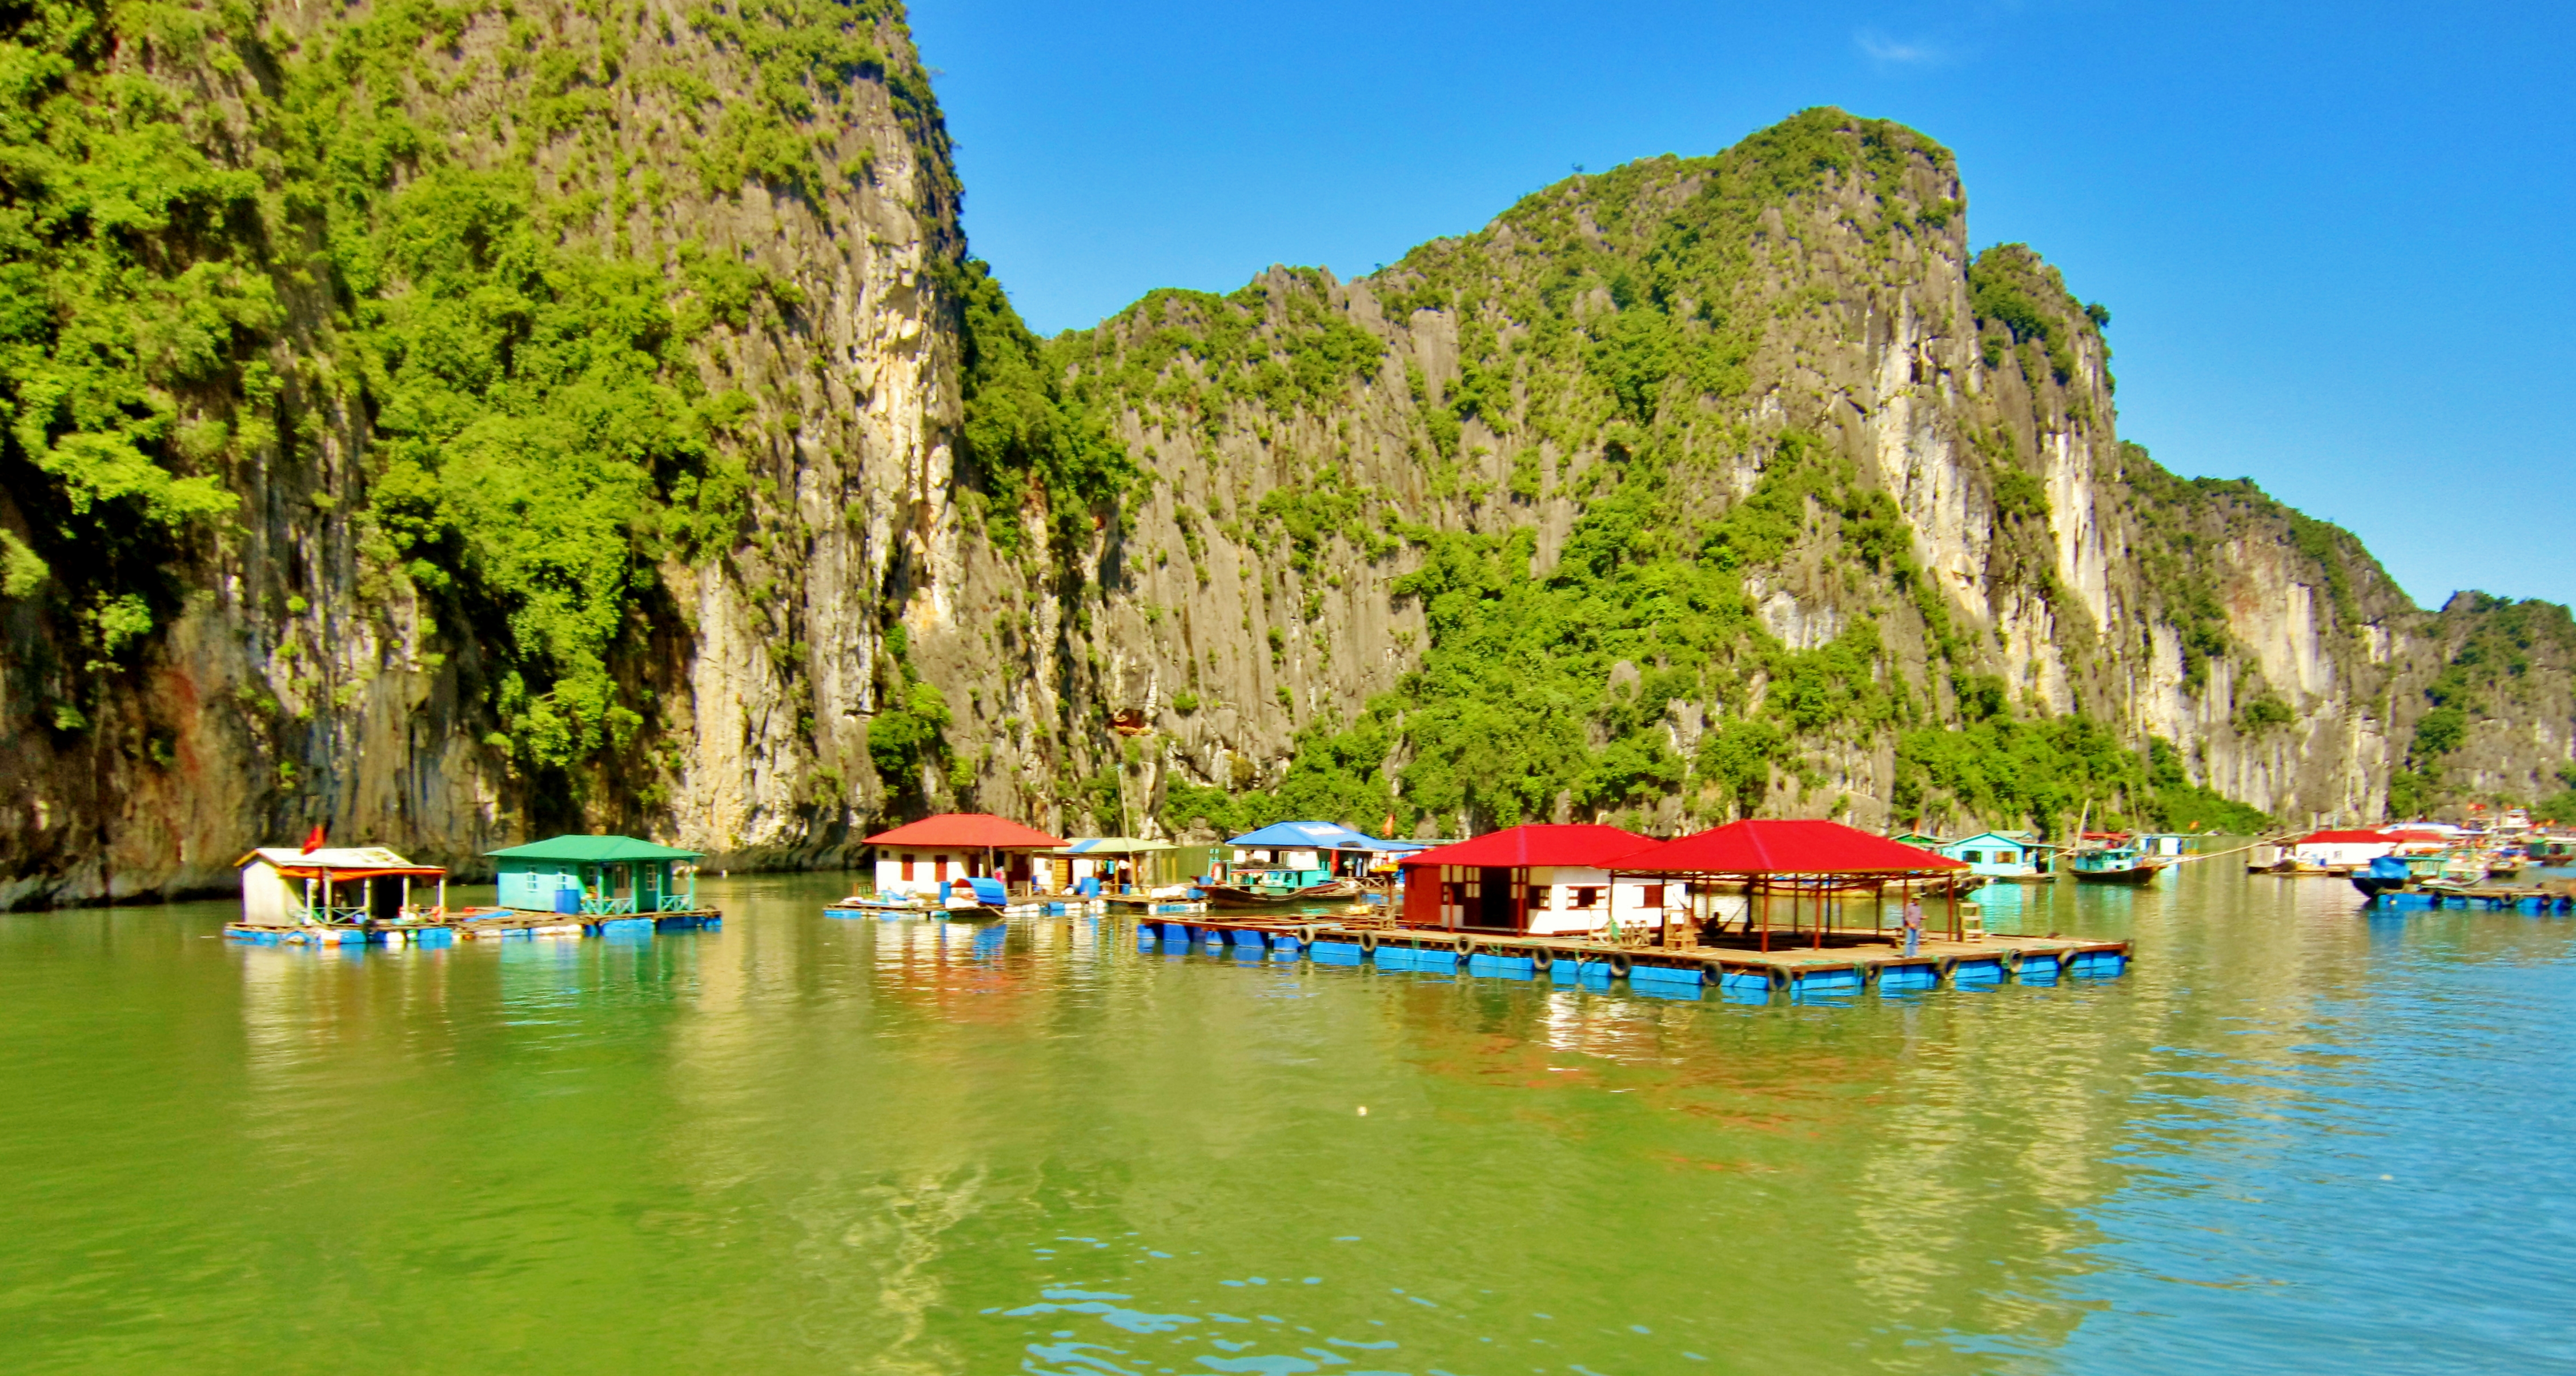 File:Floating Market in Fishing Village in Ha Long Bay, Vietnam - panoramio.jpg - Wikimedia Commons